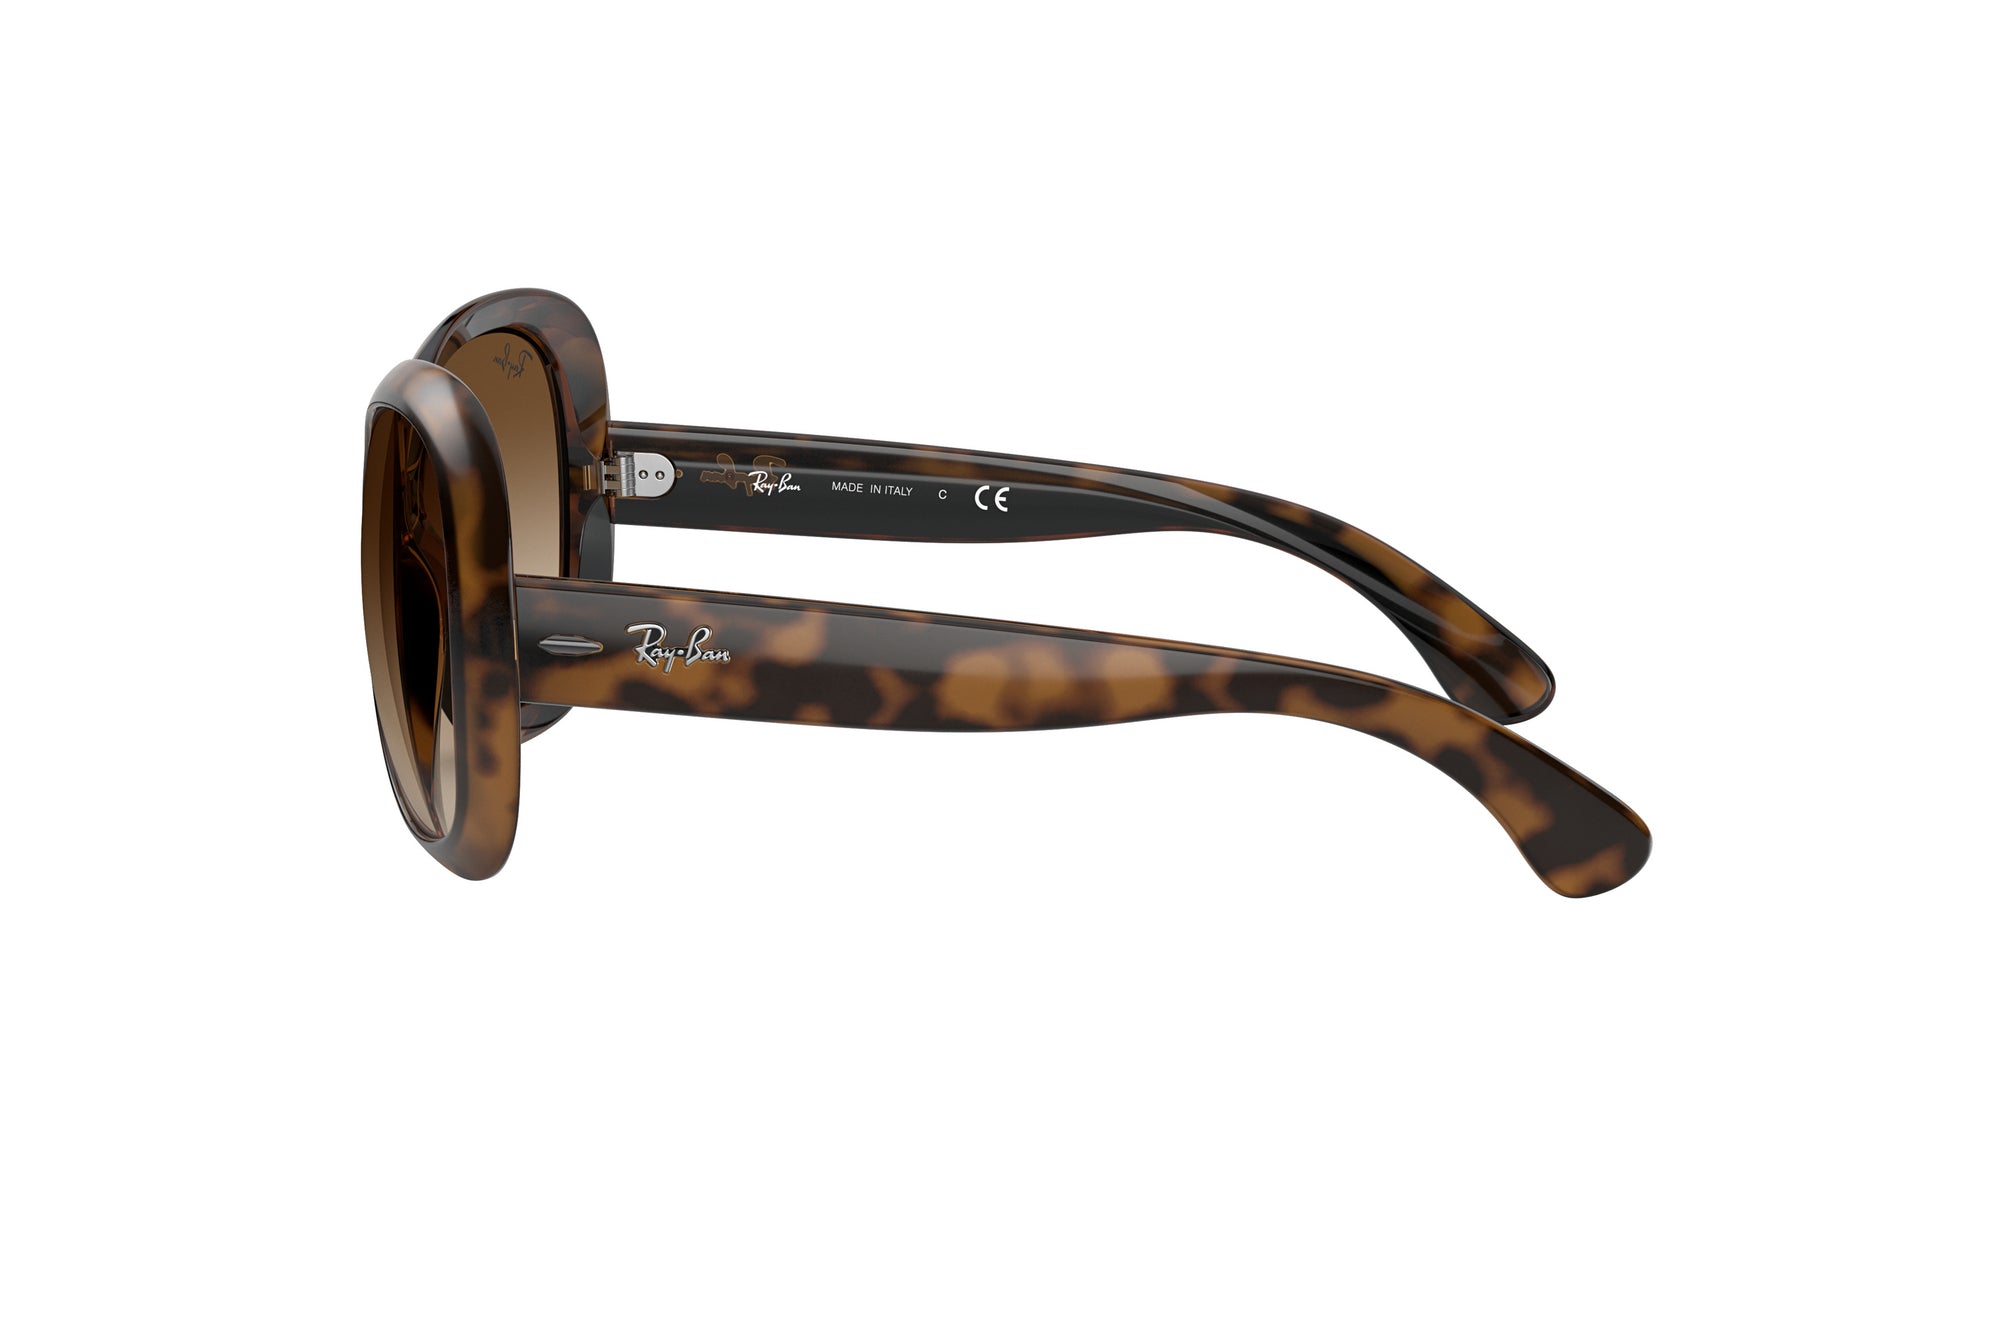 20% OFF - RAY-BAN Sunglasses Jackie Ohh II - Polished Havana Frame - Brown Gradient Lens